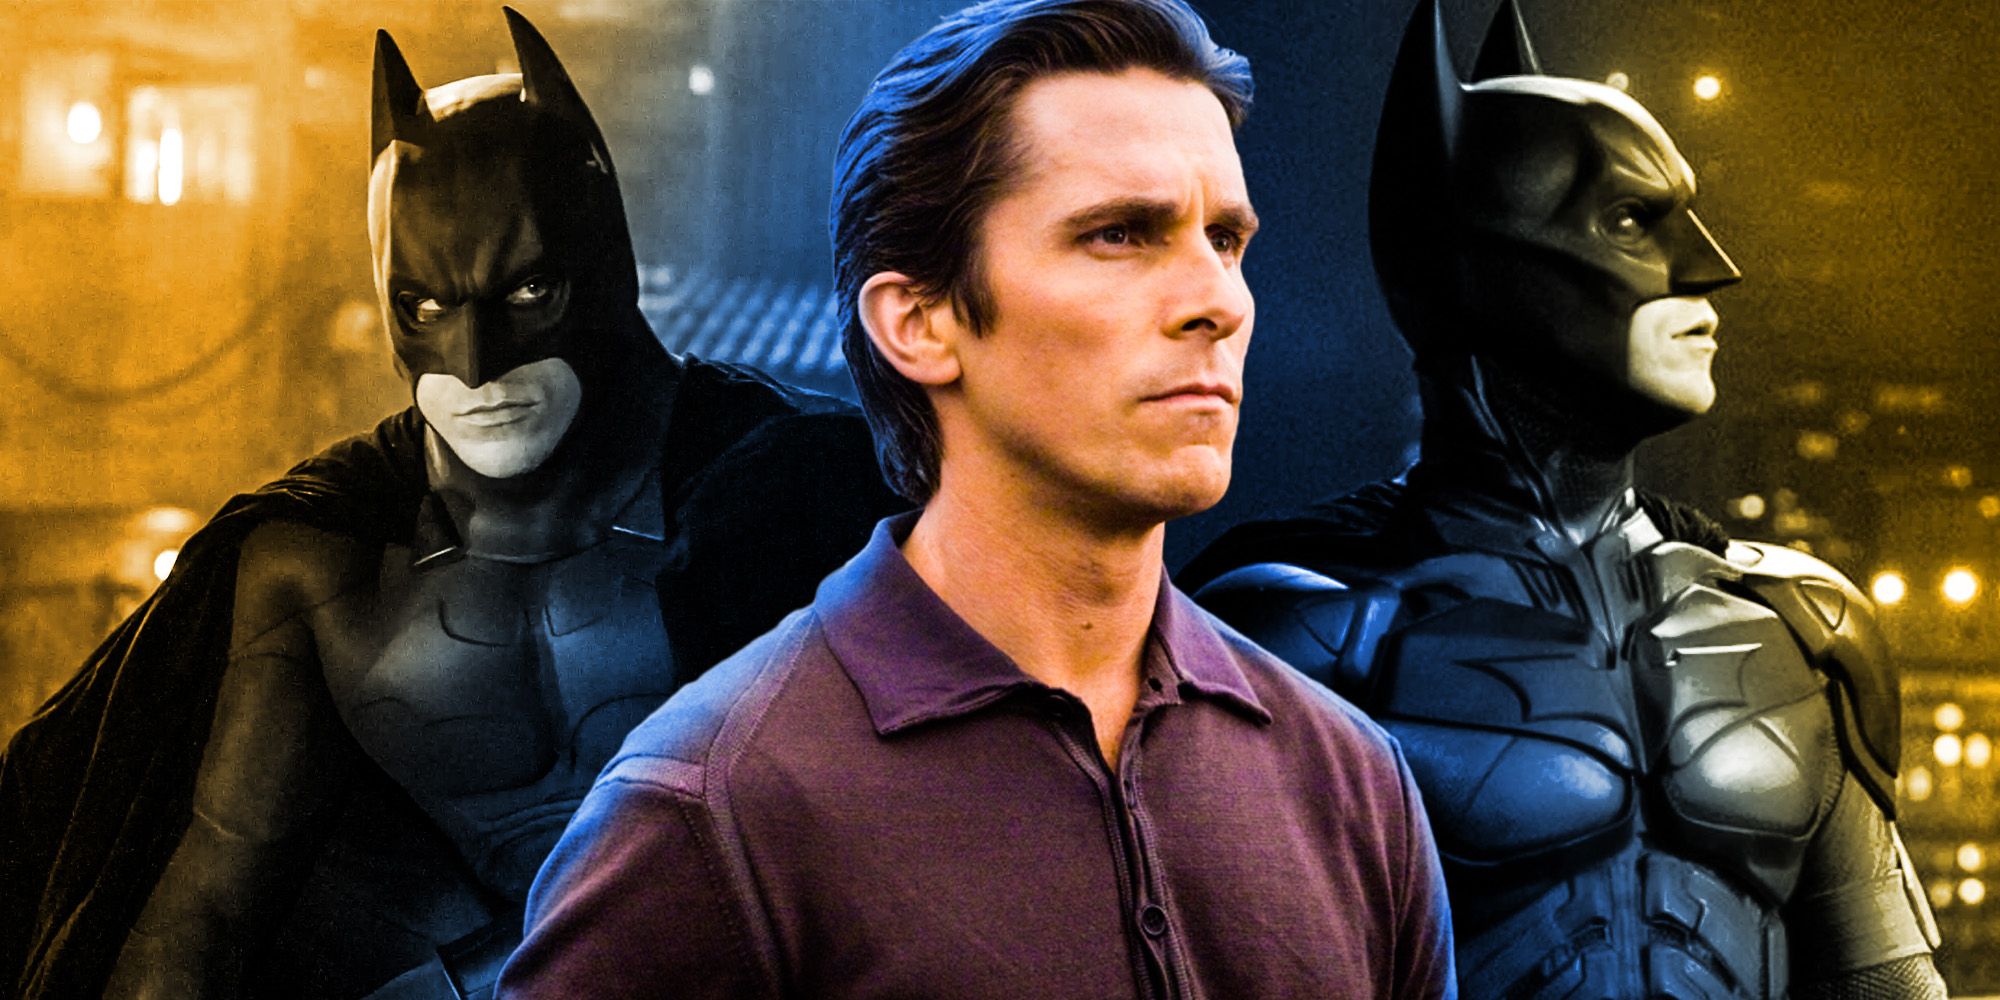 Custom image of Christian Bale as Bruce Wayne and Batman in The Dark Knight trilogy.